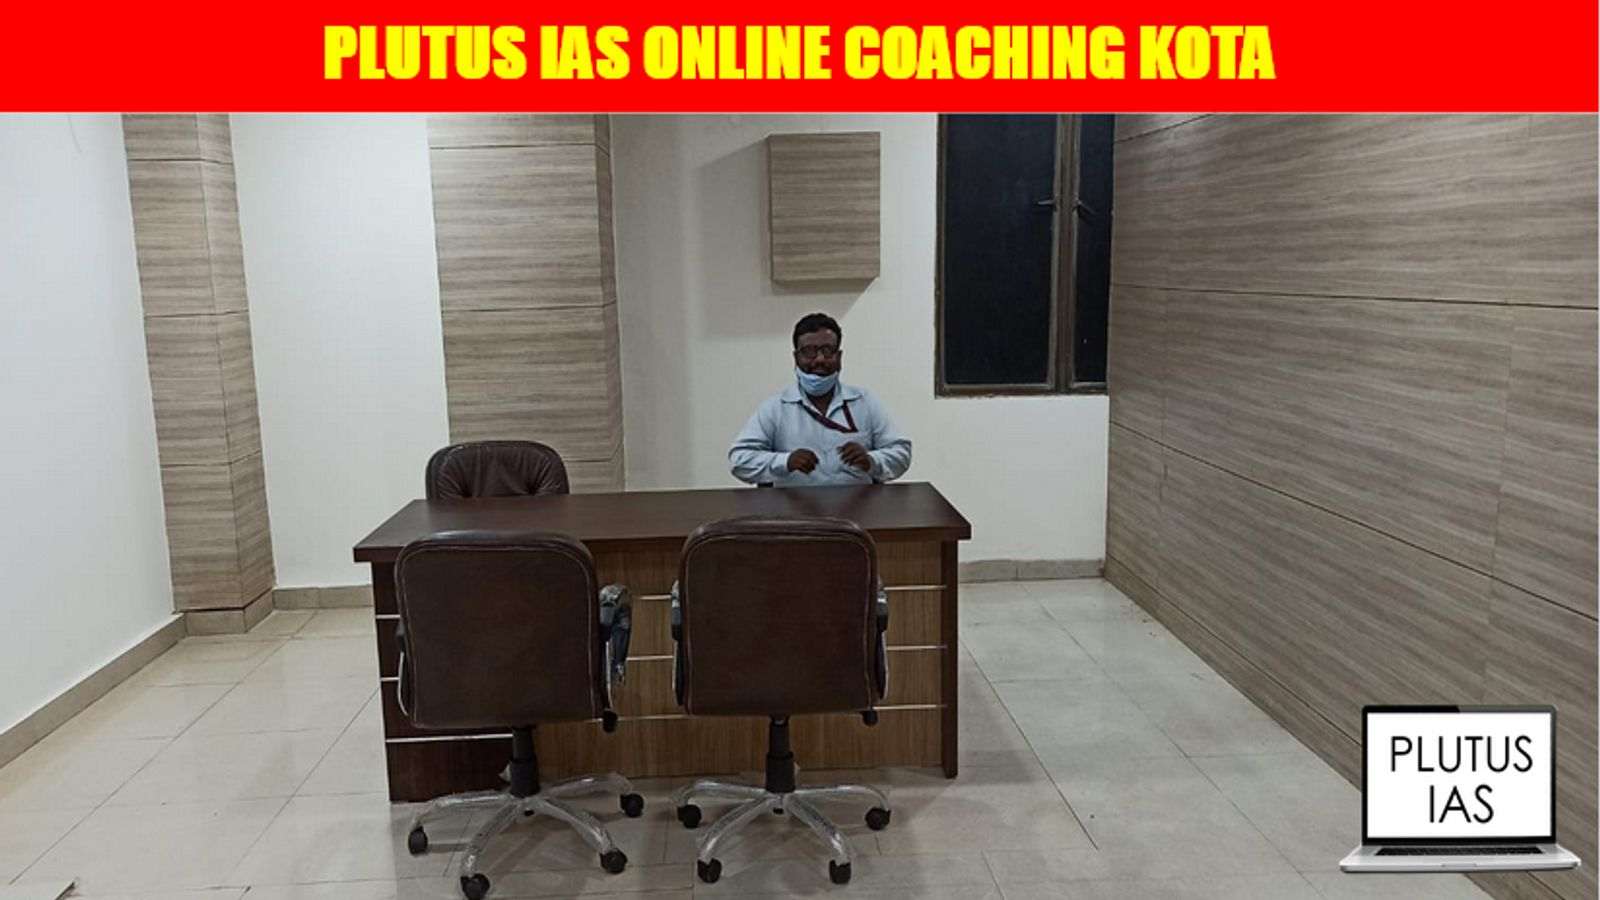 Plutus IAS Online Coaching Kota